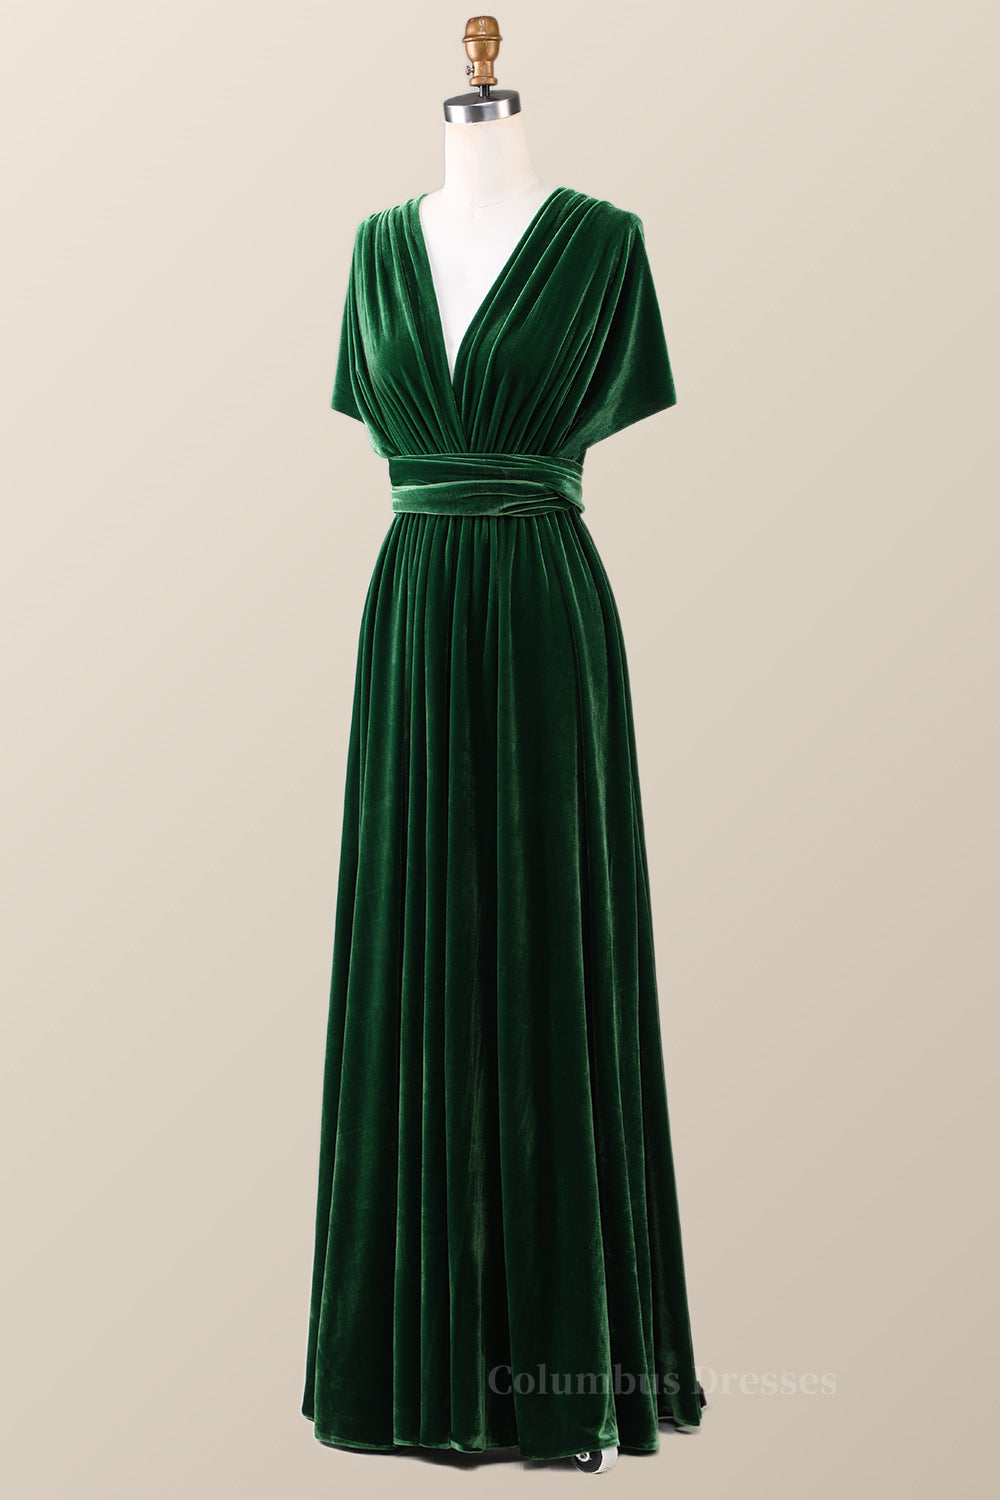 Black Tie Wedding Guest Dress, Dark Green Velvet Convertible Bridesmaid Dress